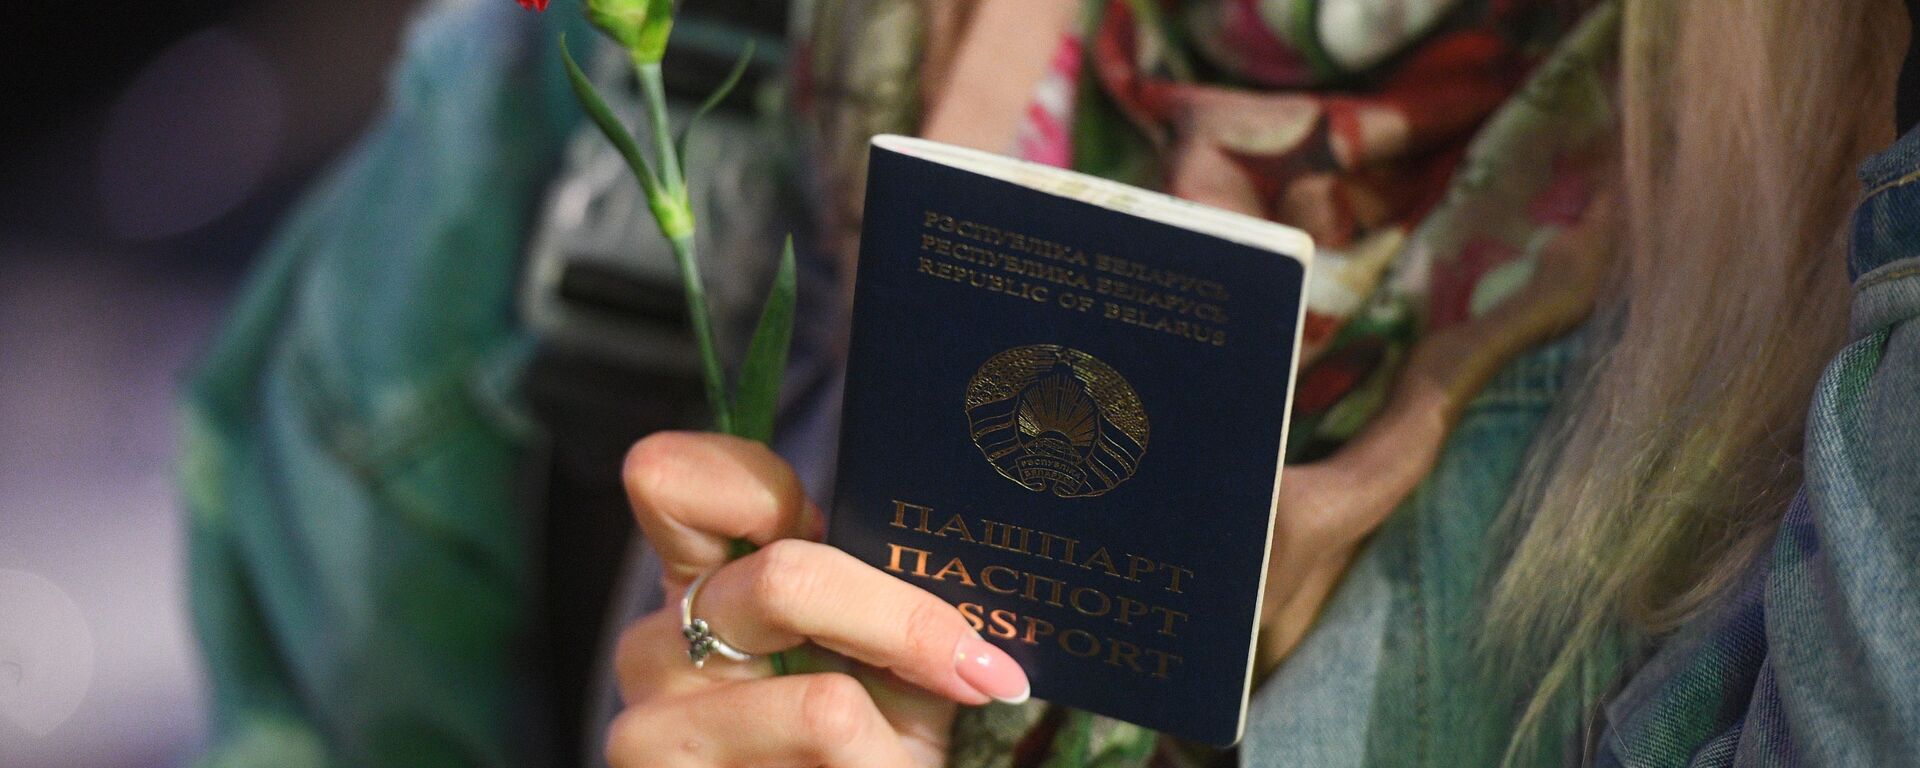 Паспорт гражданина Белоруссии - Sputnik Latvija, 1920, 07.04.2021